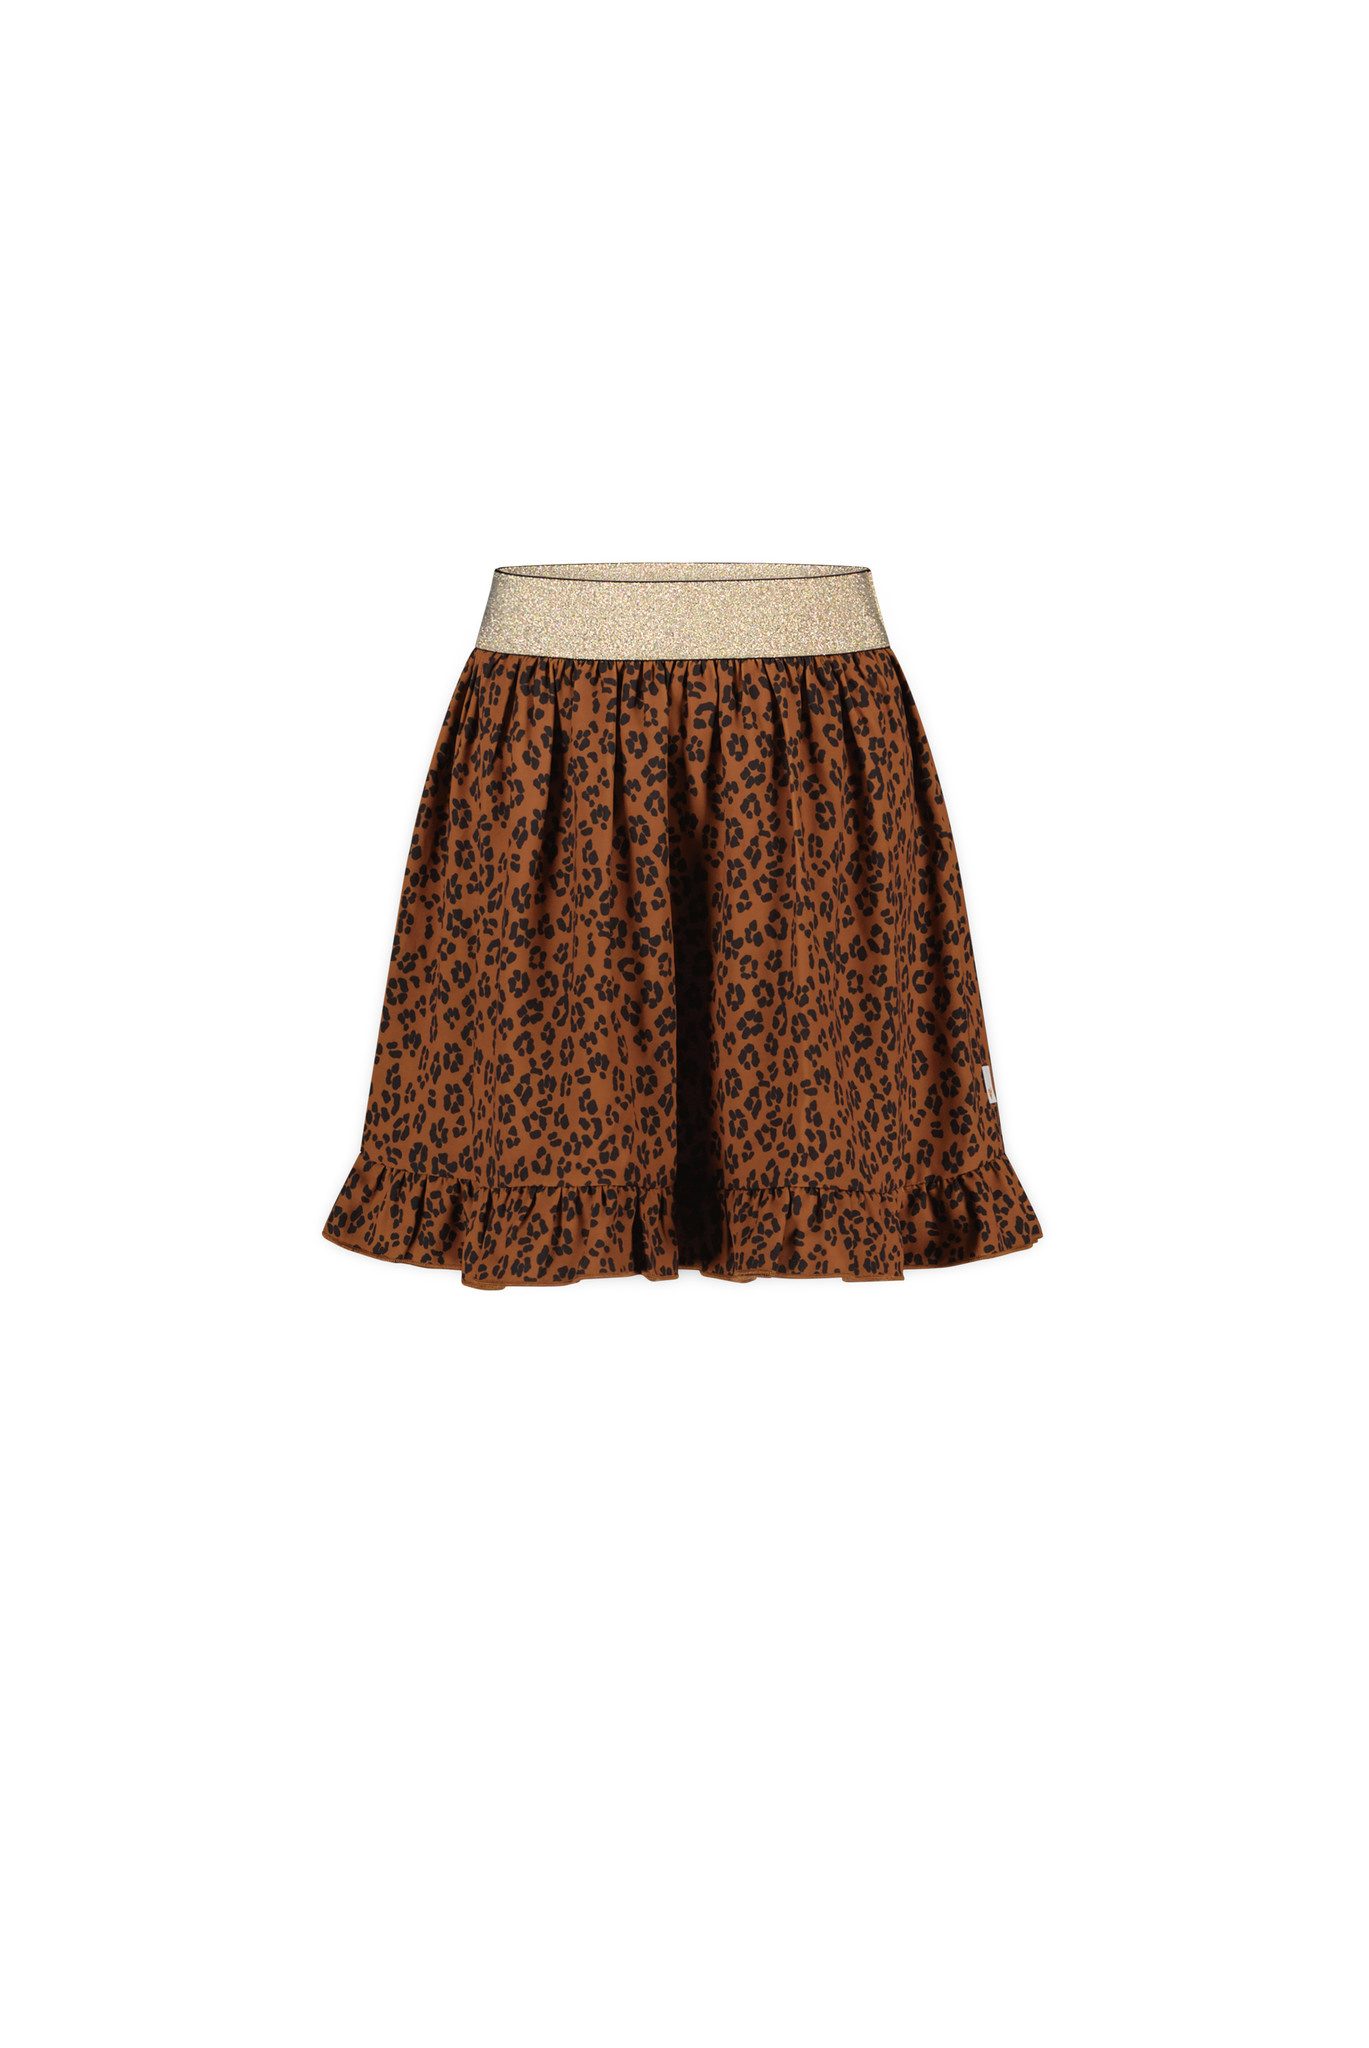 Moodstreet Skirt Recycled Pes Leopard Meisjes - Korte rok - Bruin - Maat 134/140